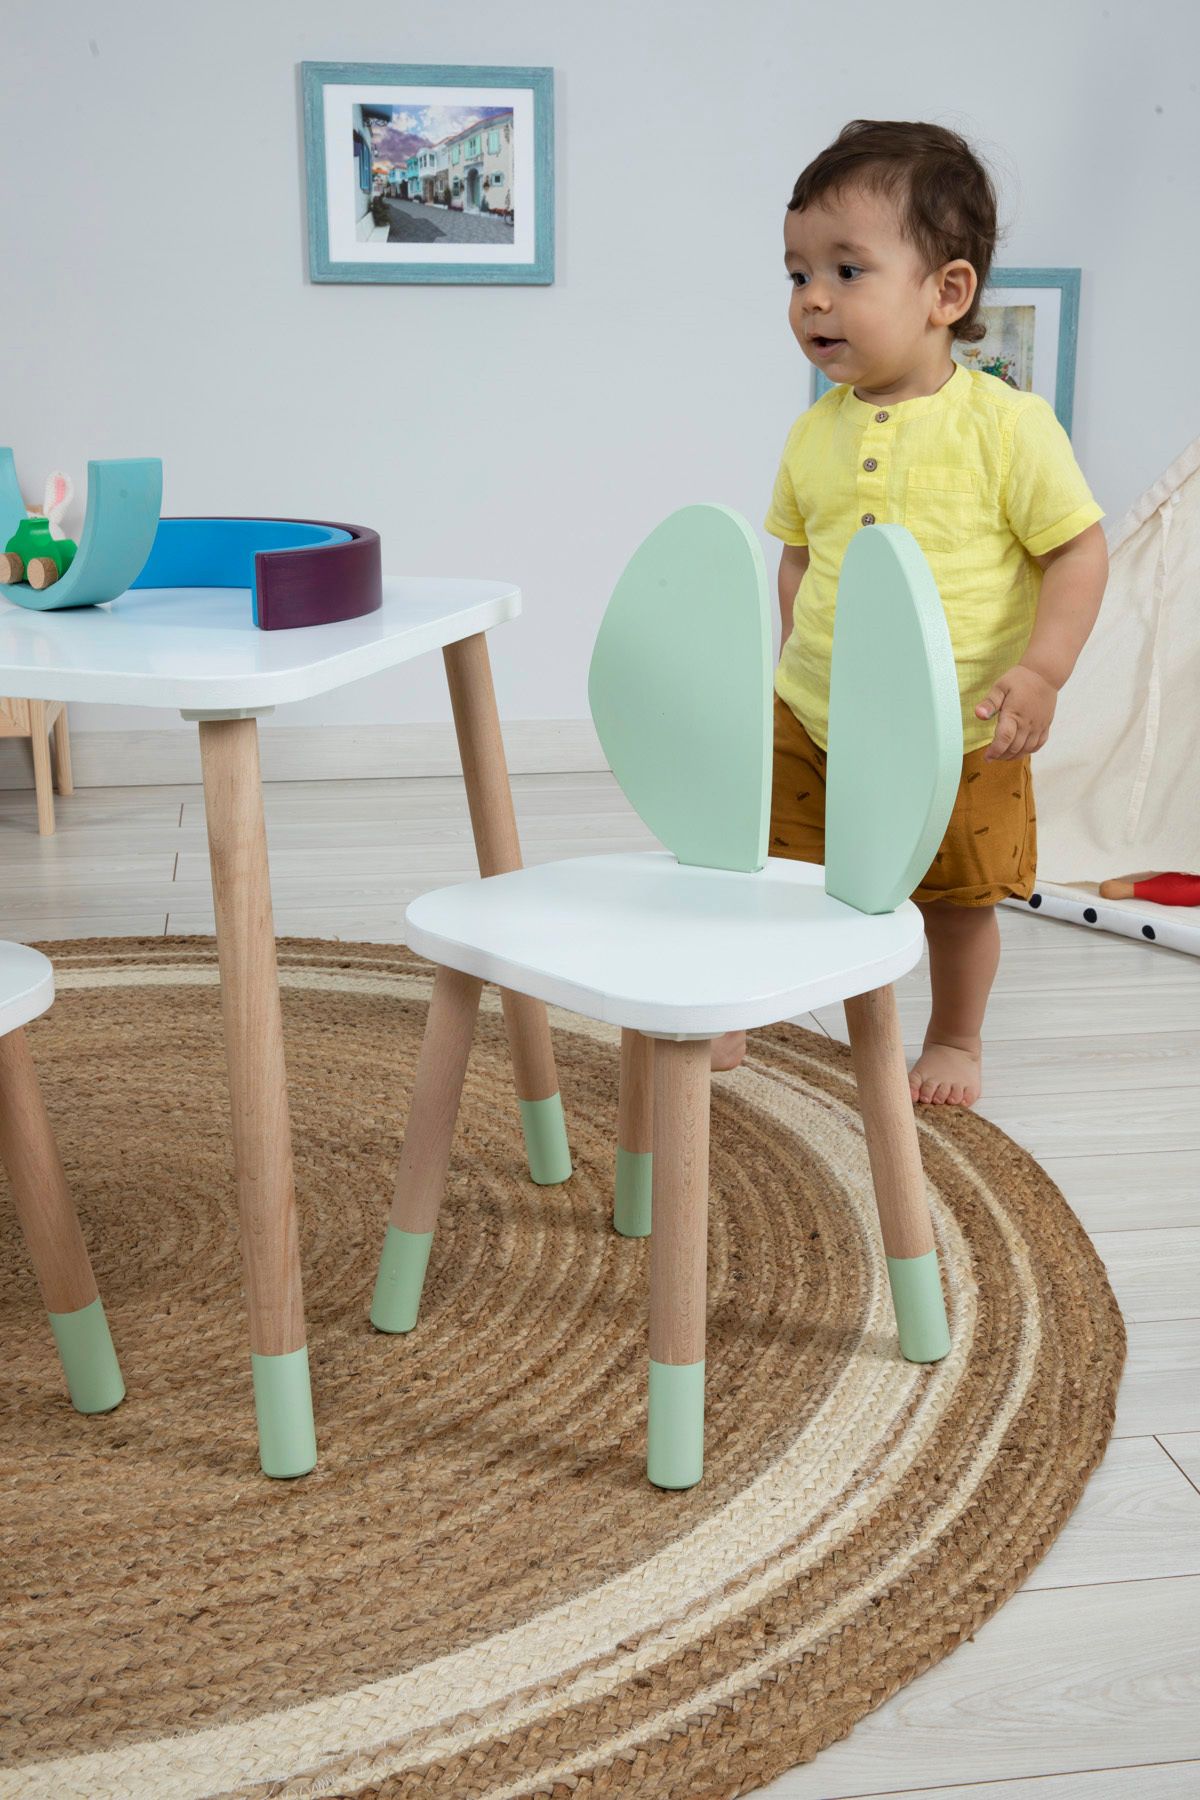 Bee Smart Ahşap Montessori Aktivite Masası Sandalyesi, Bunny Masa Sandalye